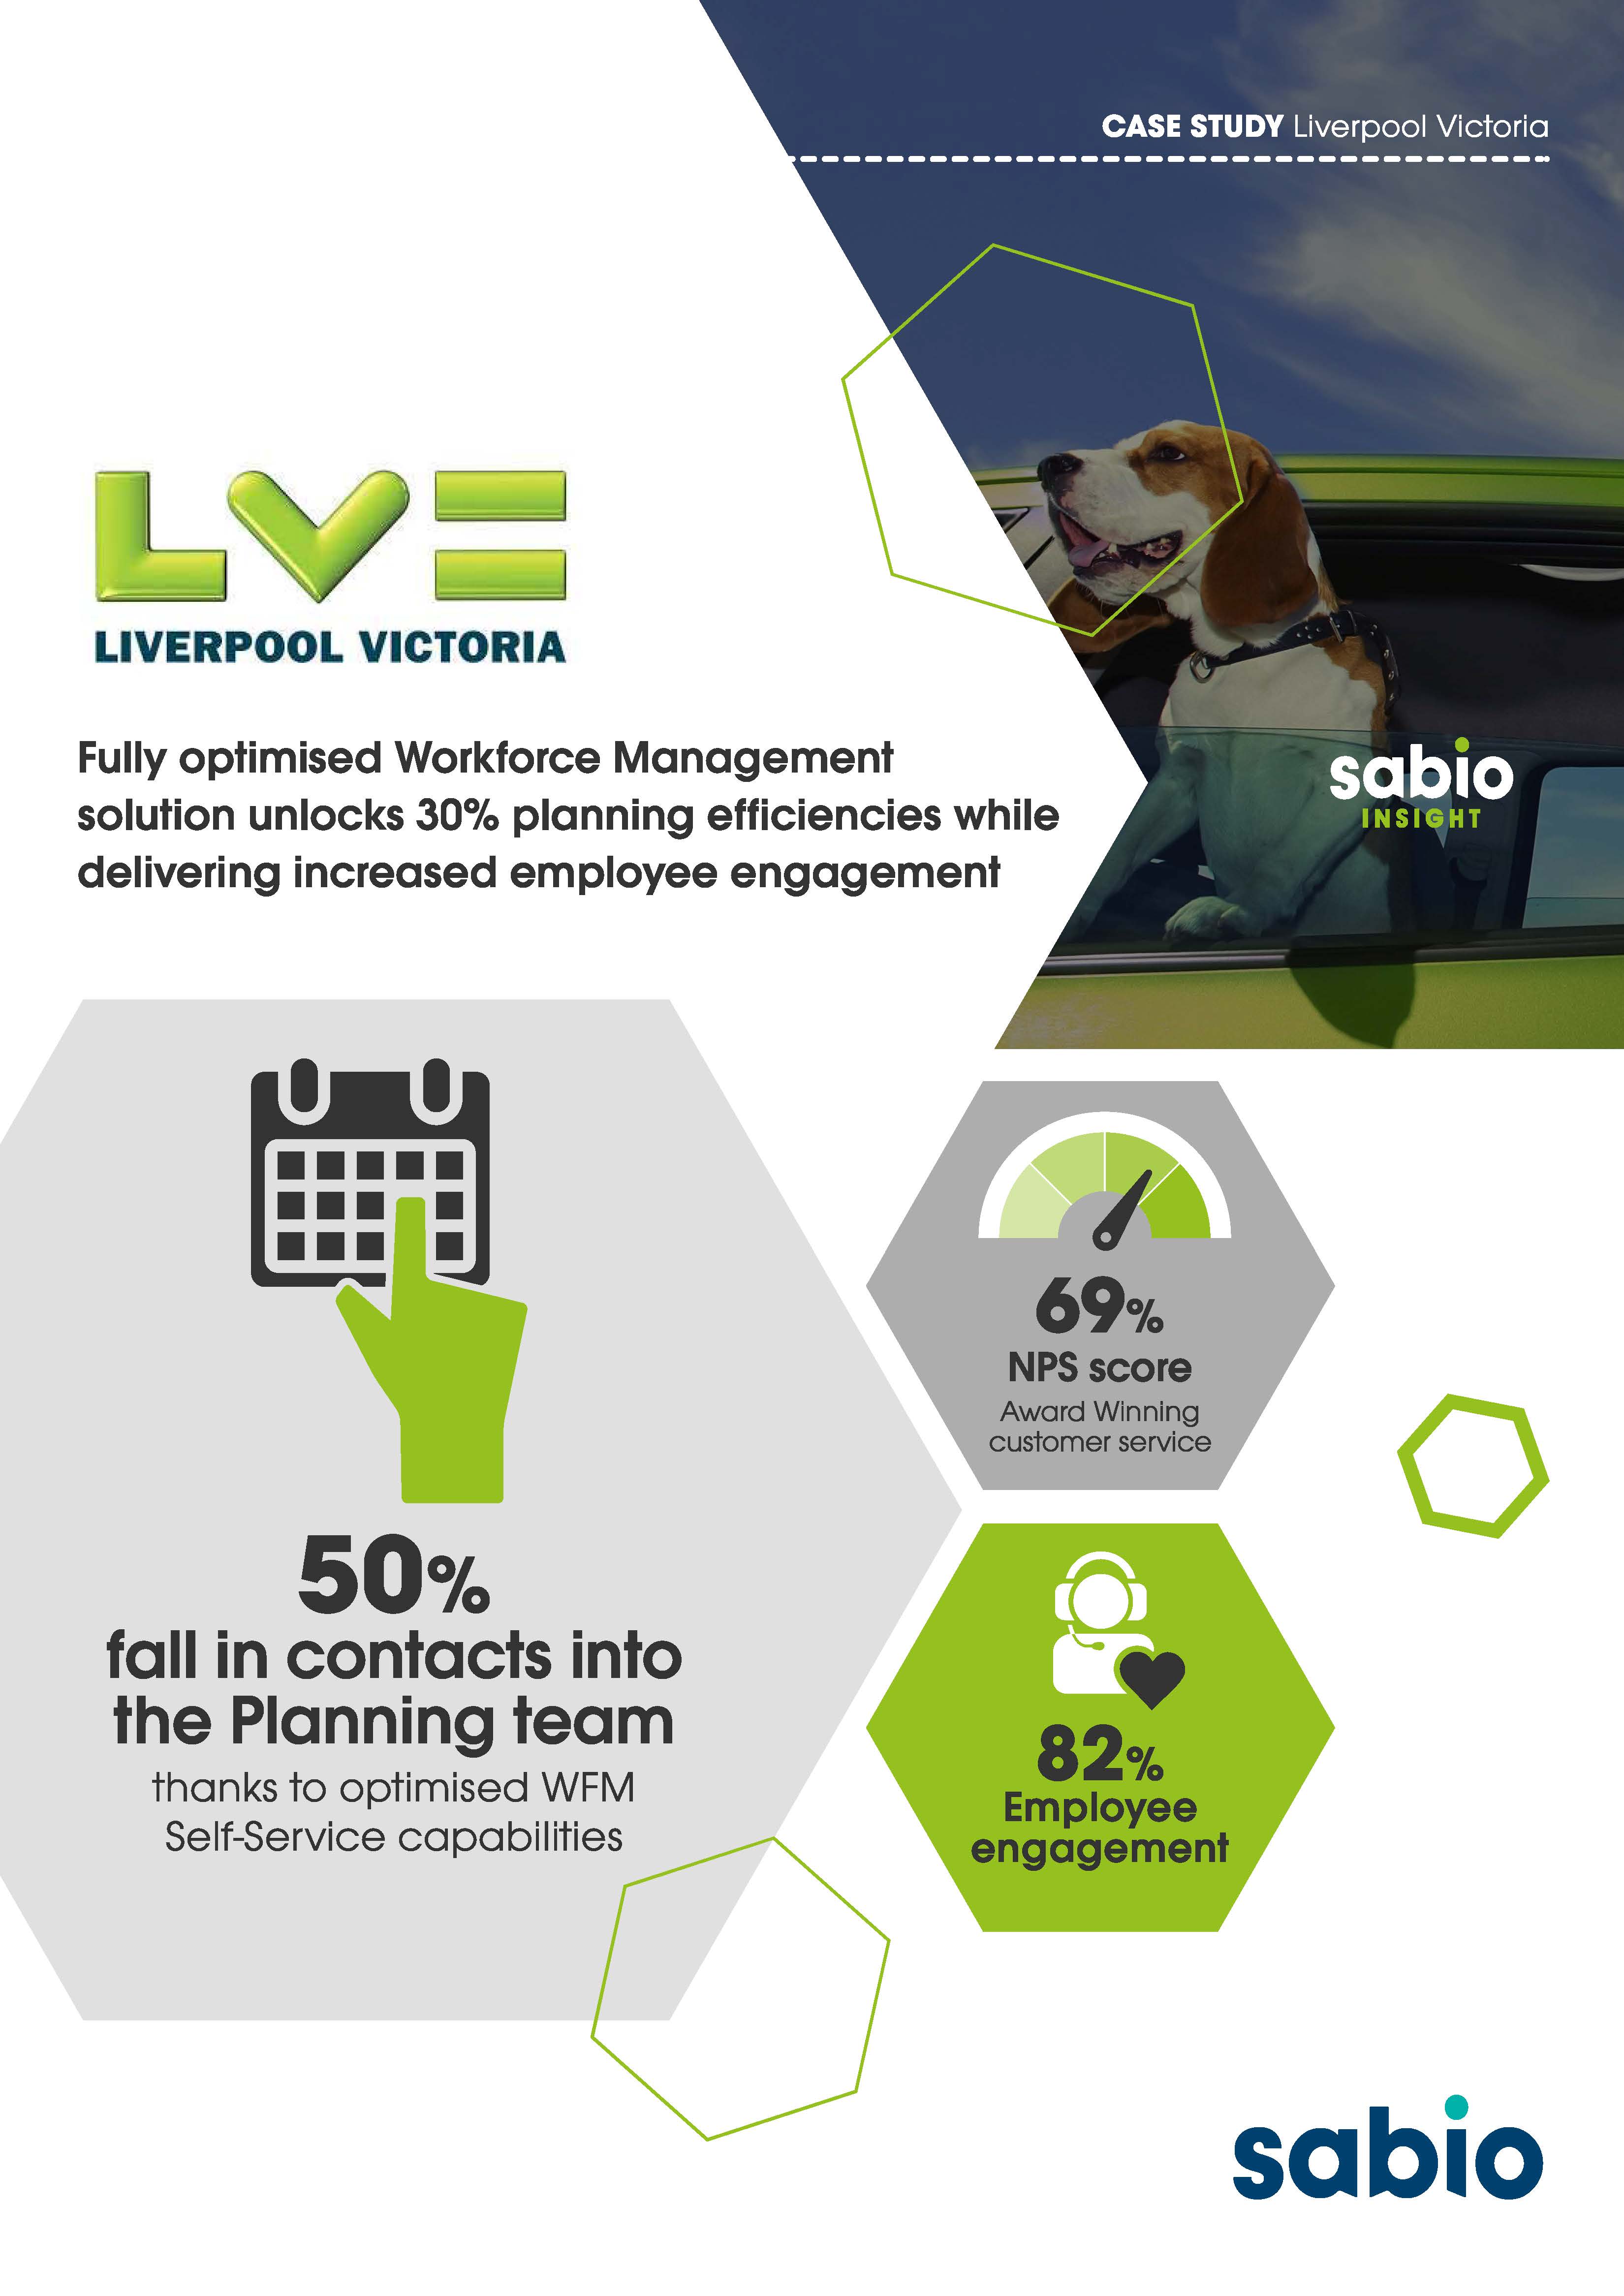 LV= Fully optimised Workforce Management solution unlocks 30% planning efficiencies